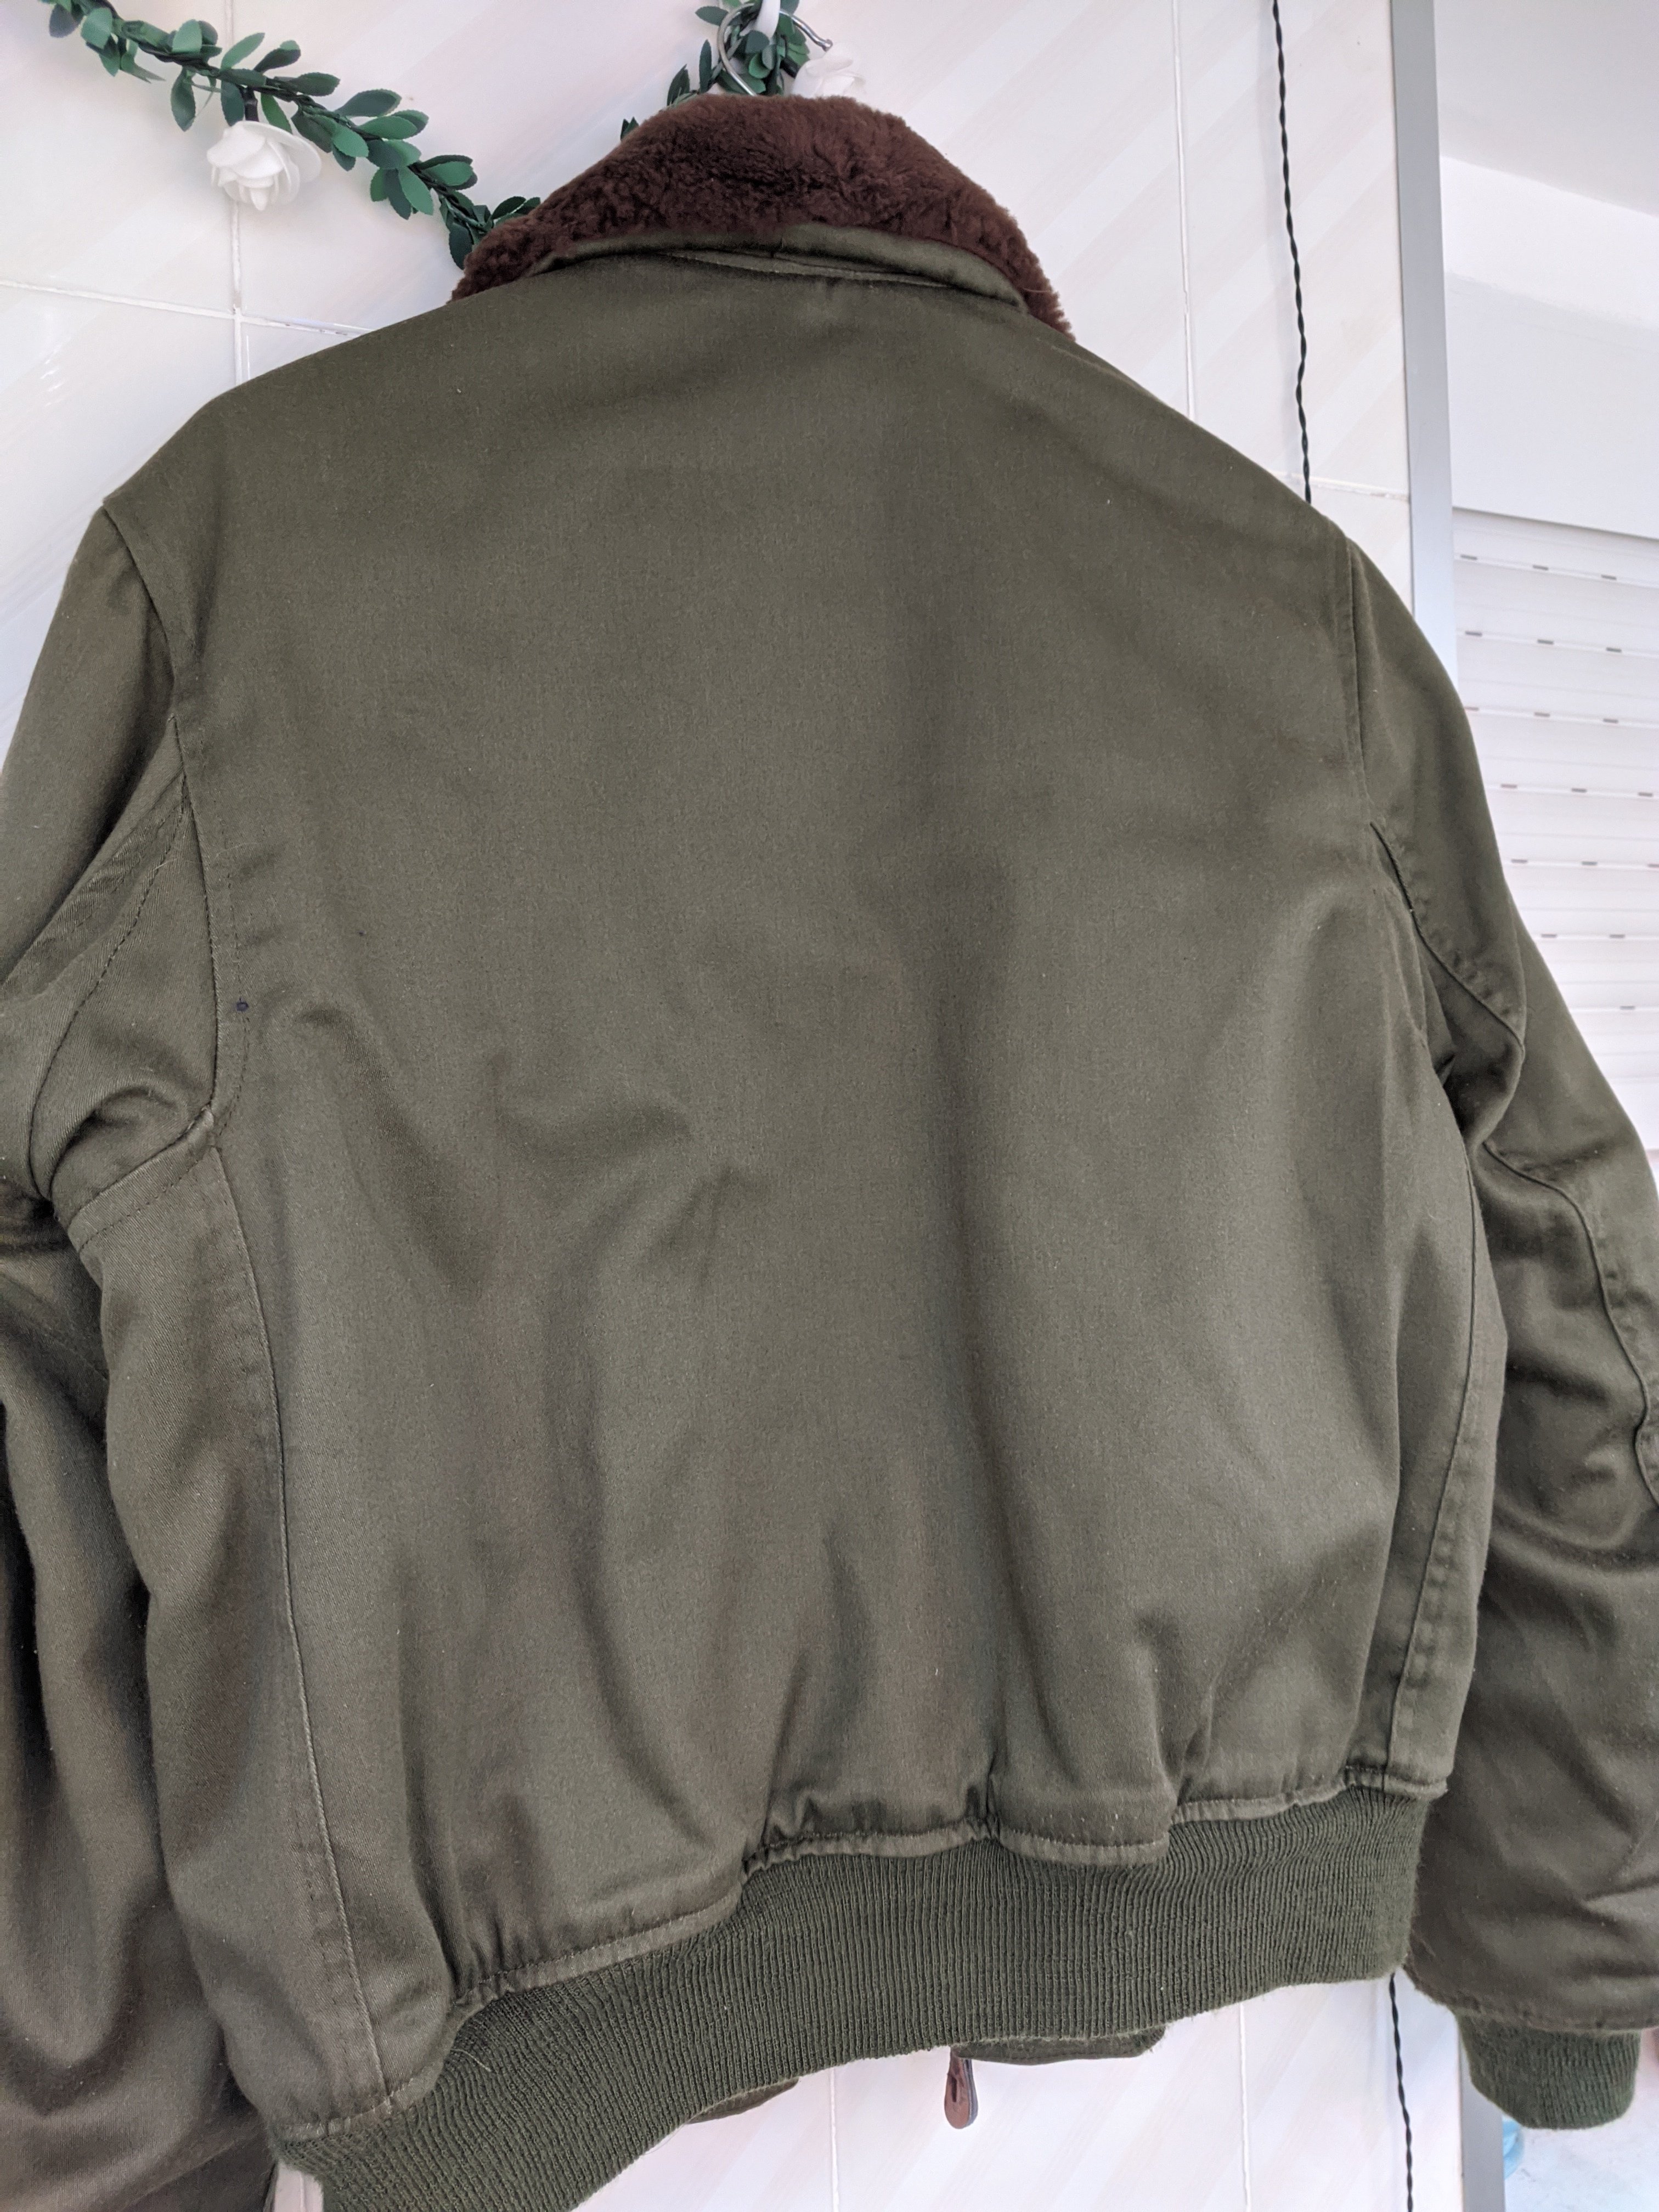 Spiewak B10 review | Vintage Leather Jackets Forum